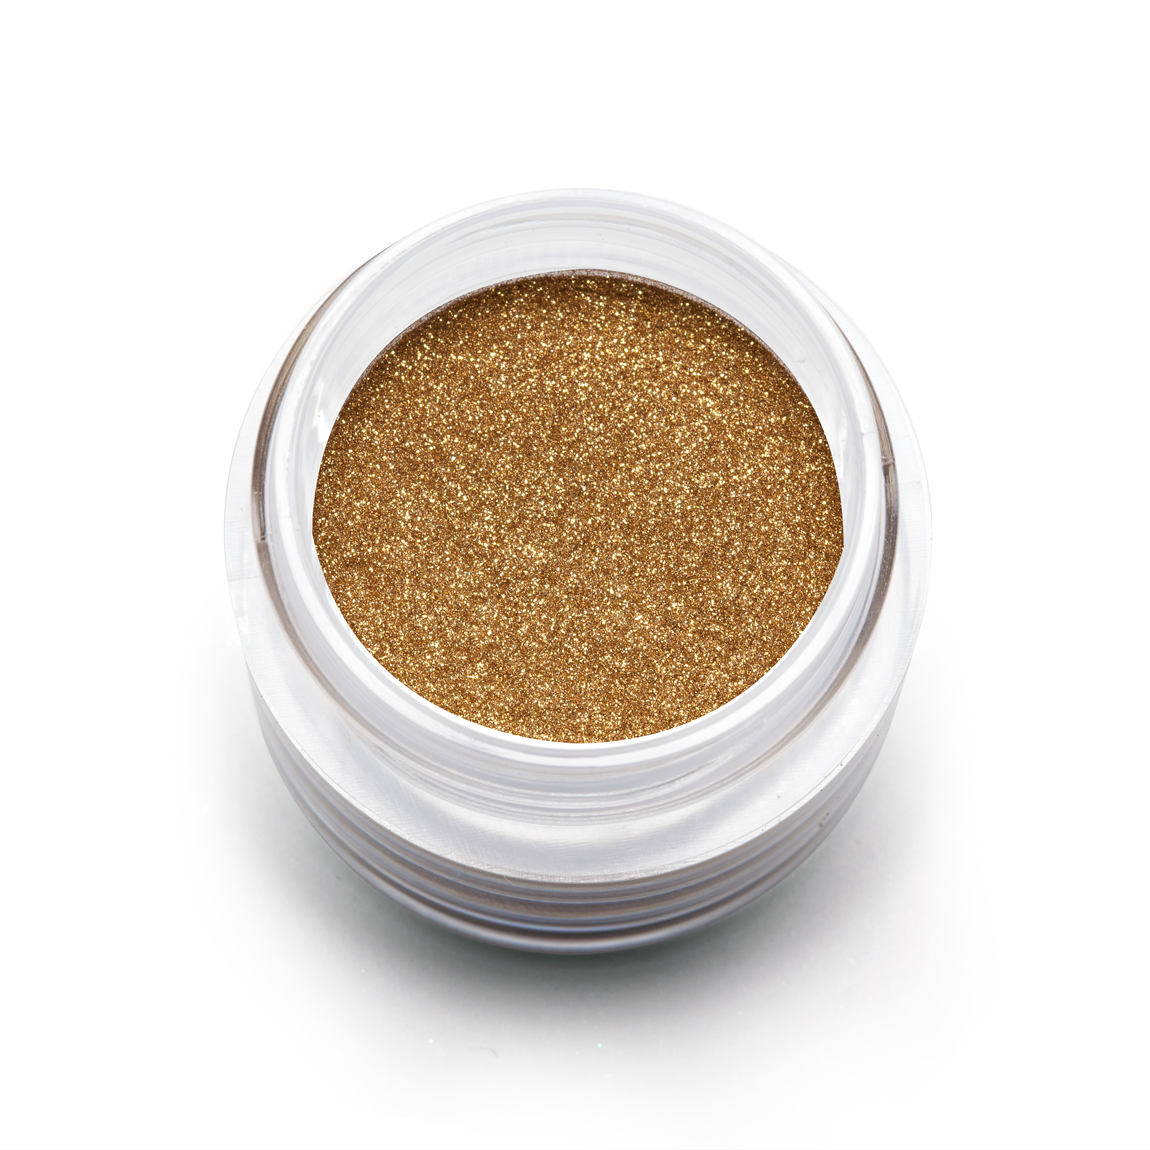 Sugarpill Cosmetics Loose Eyeshadow in Goldilux